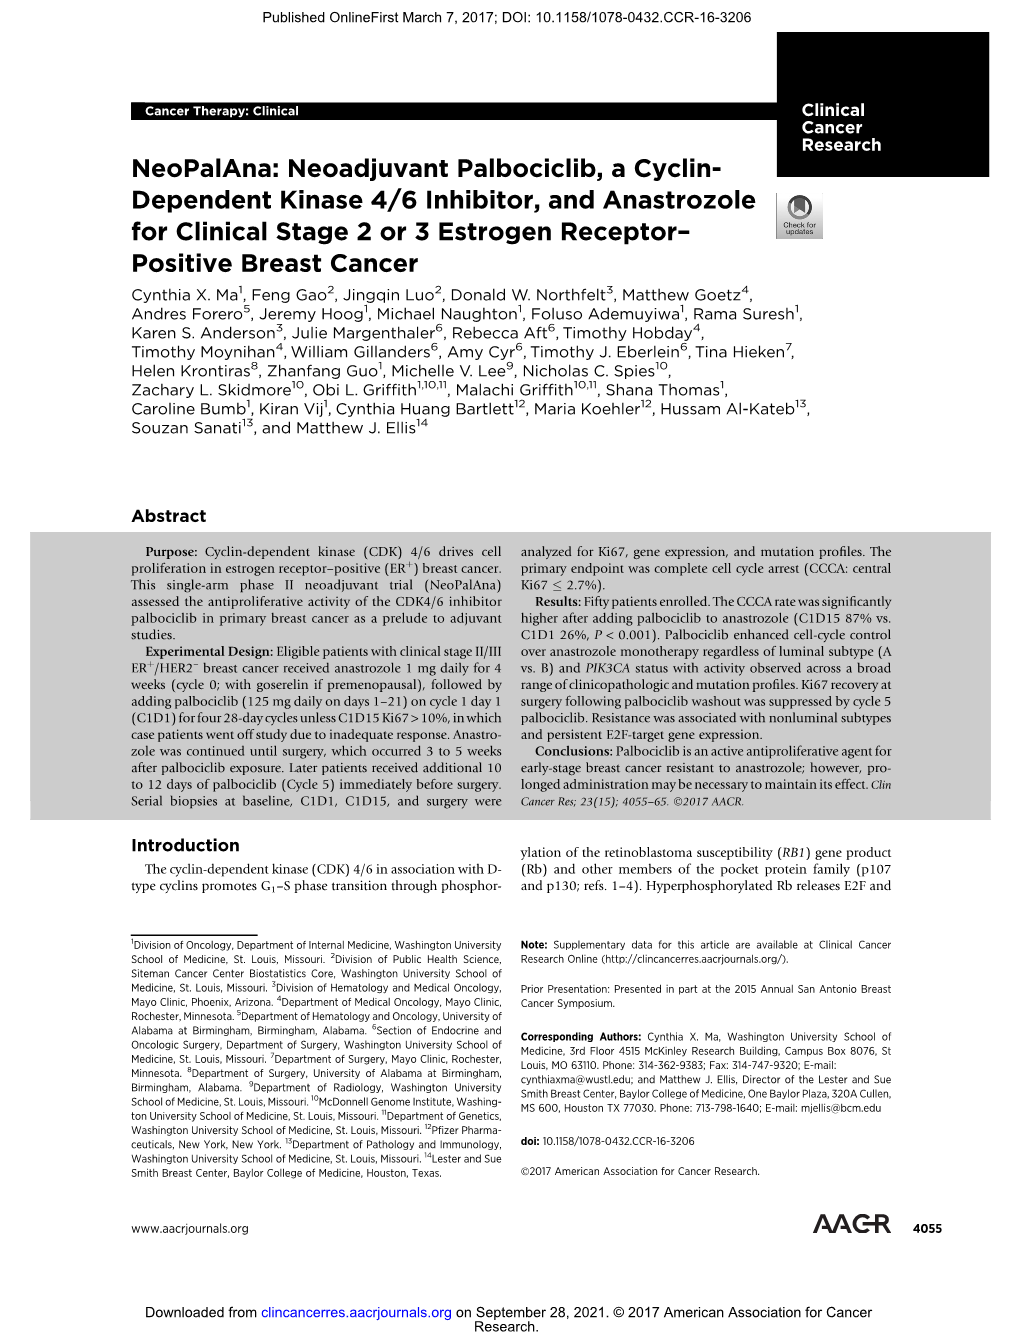 Neopalana: Neoadjuvant Palbociclib, a Cyclin- Dependent Kinase 4/6